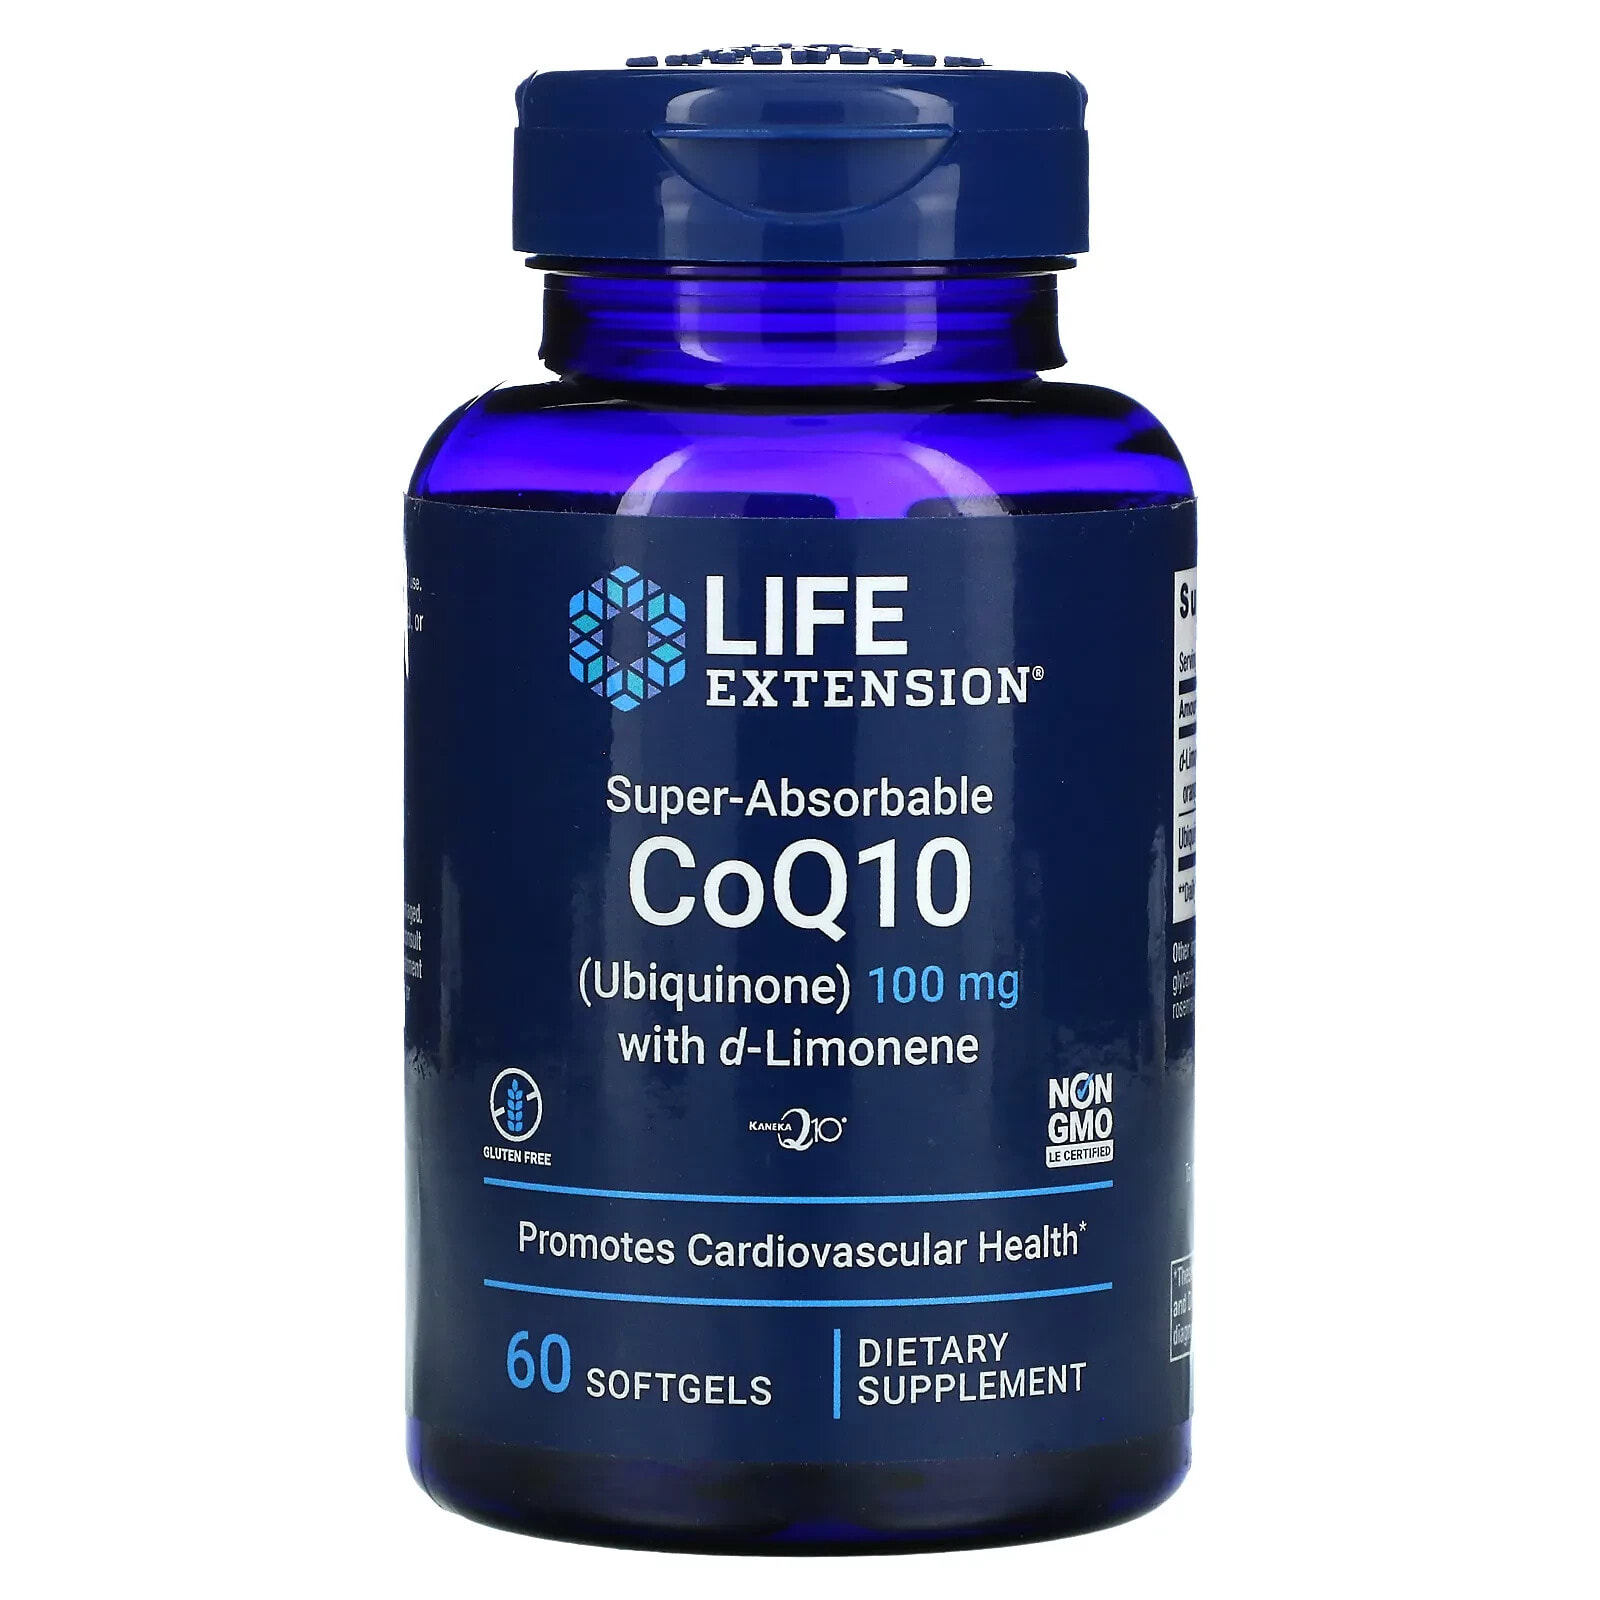 Лайф Экстэншн, Super-Absorbable CoQ10, суперусваиваемый коэнзим Q10 (убихинон) с d-лимоненом, 100 мг, 60 капсул